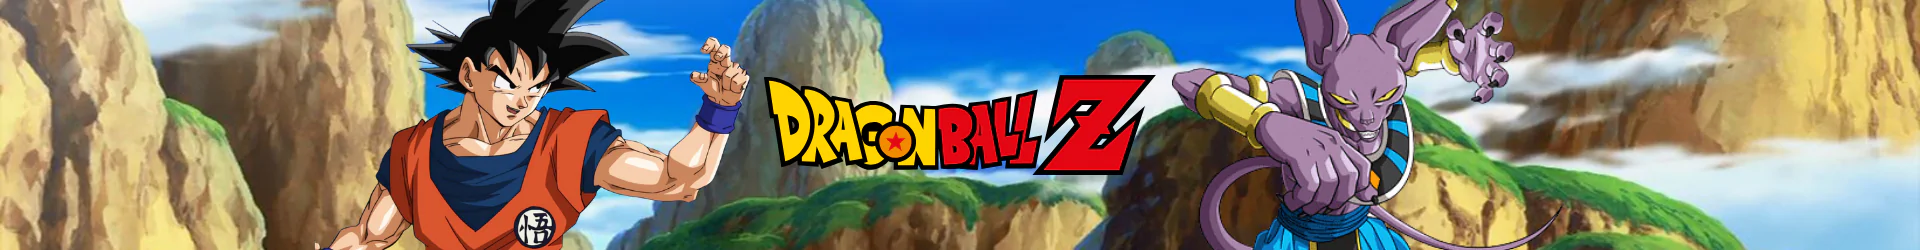 Dragon Ball cuccok termékek banner